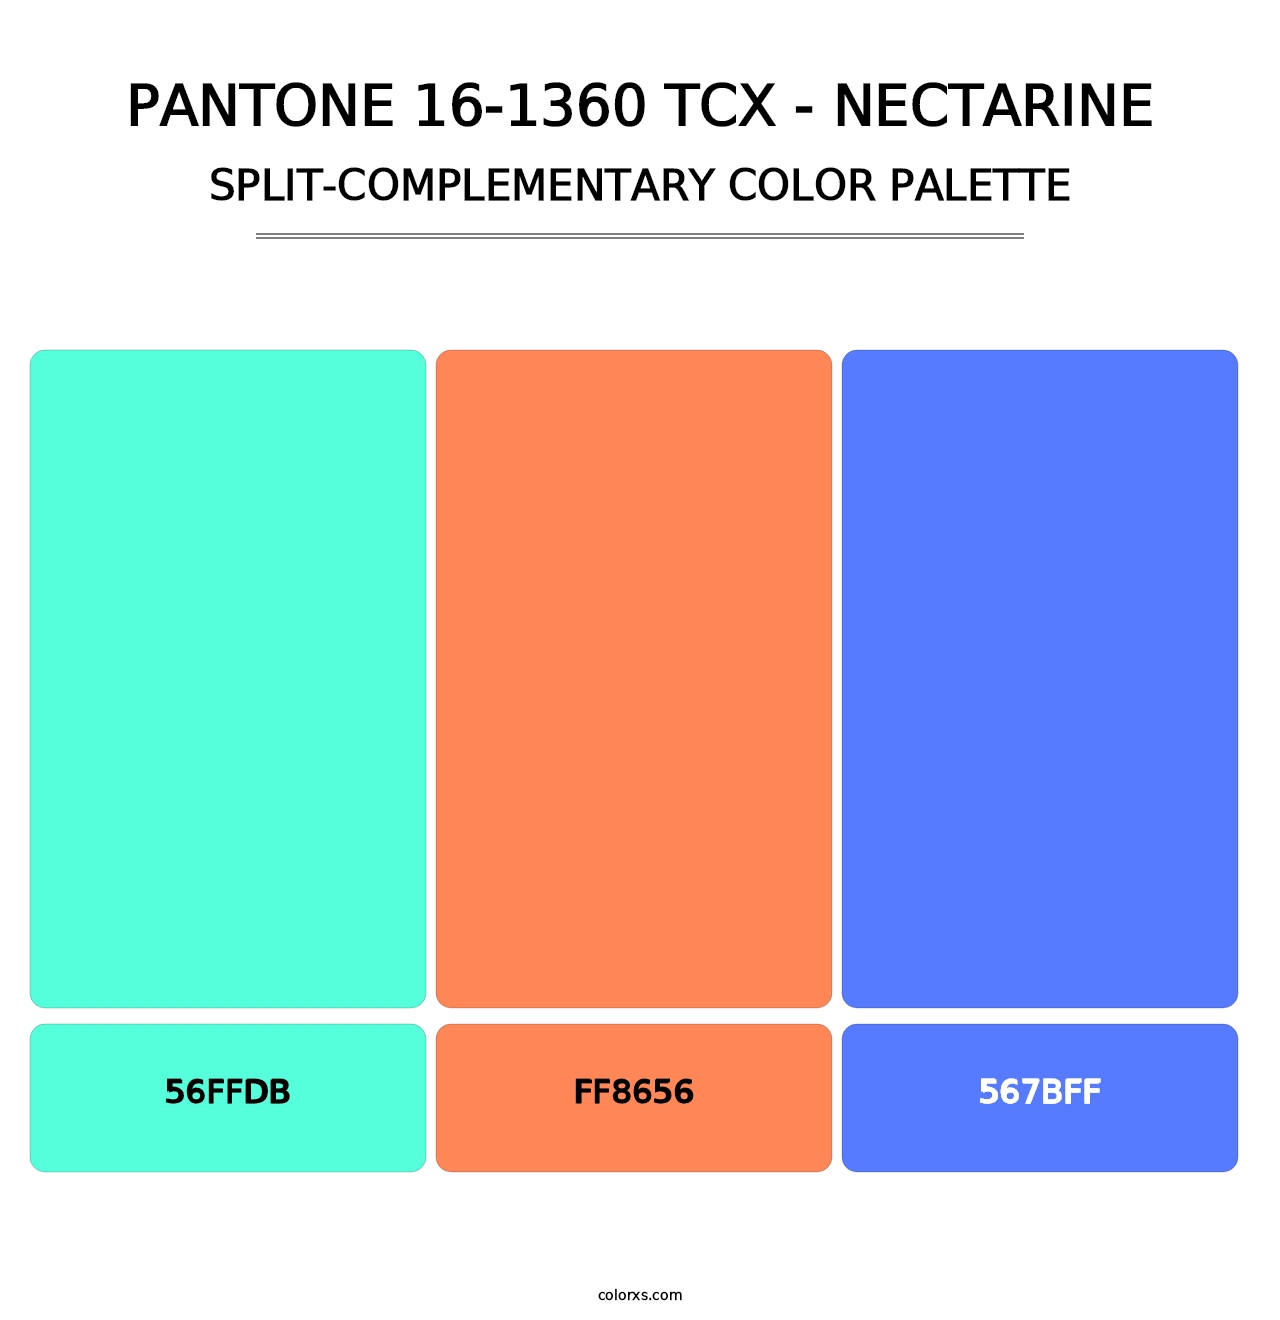 PANTONE 16-1360 TCX - Nectarine - Split-Complementary Color Palette